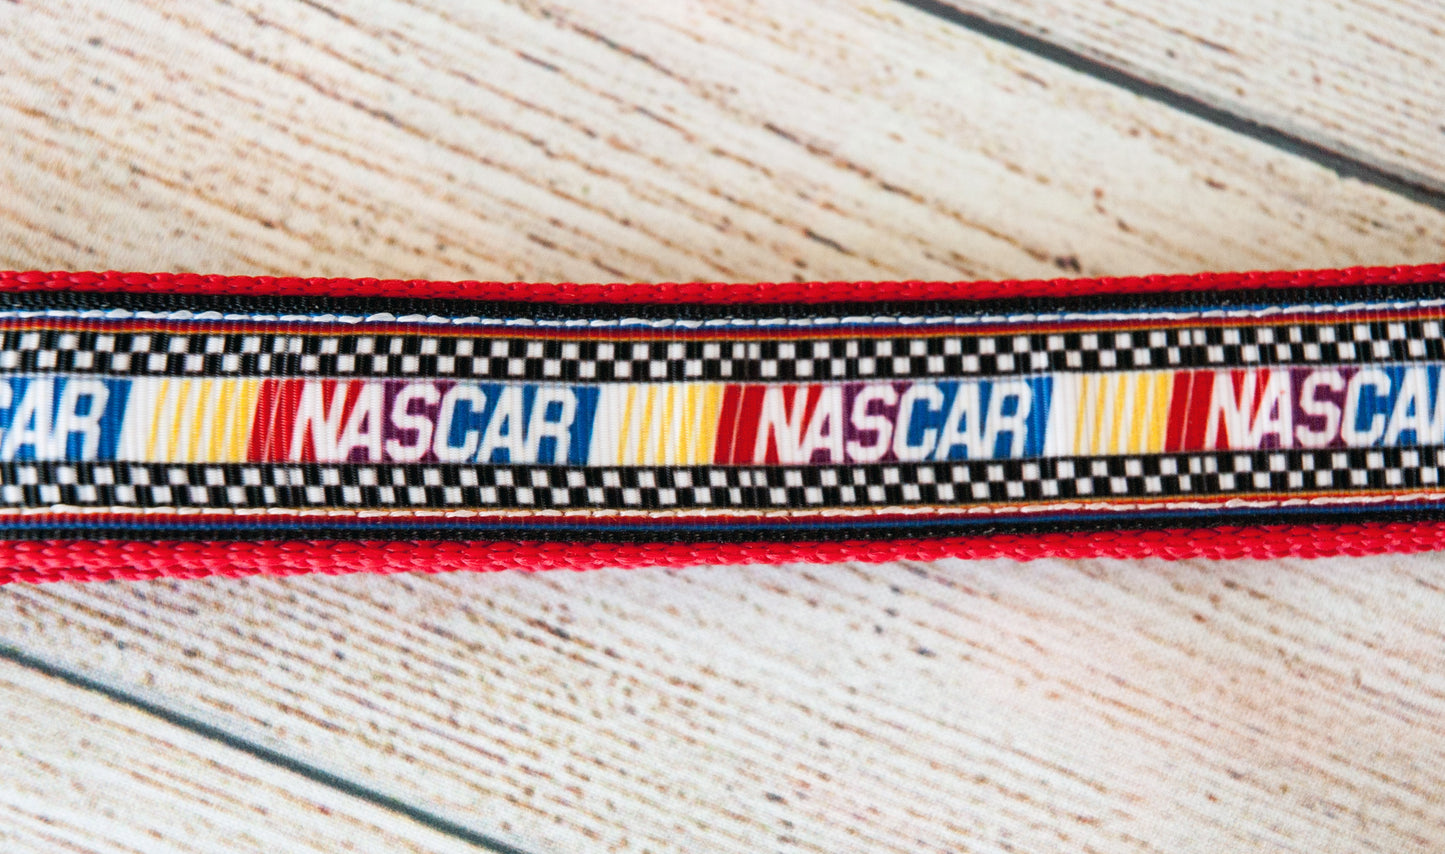 Nascar dog collar, Car Racing dog collar. 1" or 3/4" wide